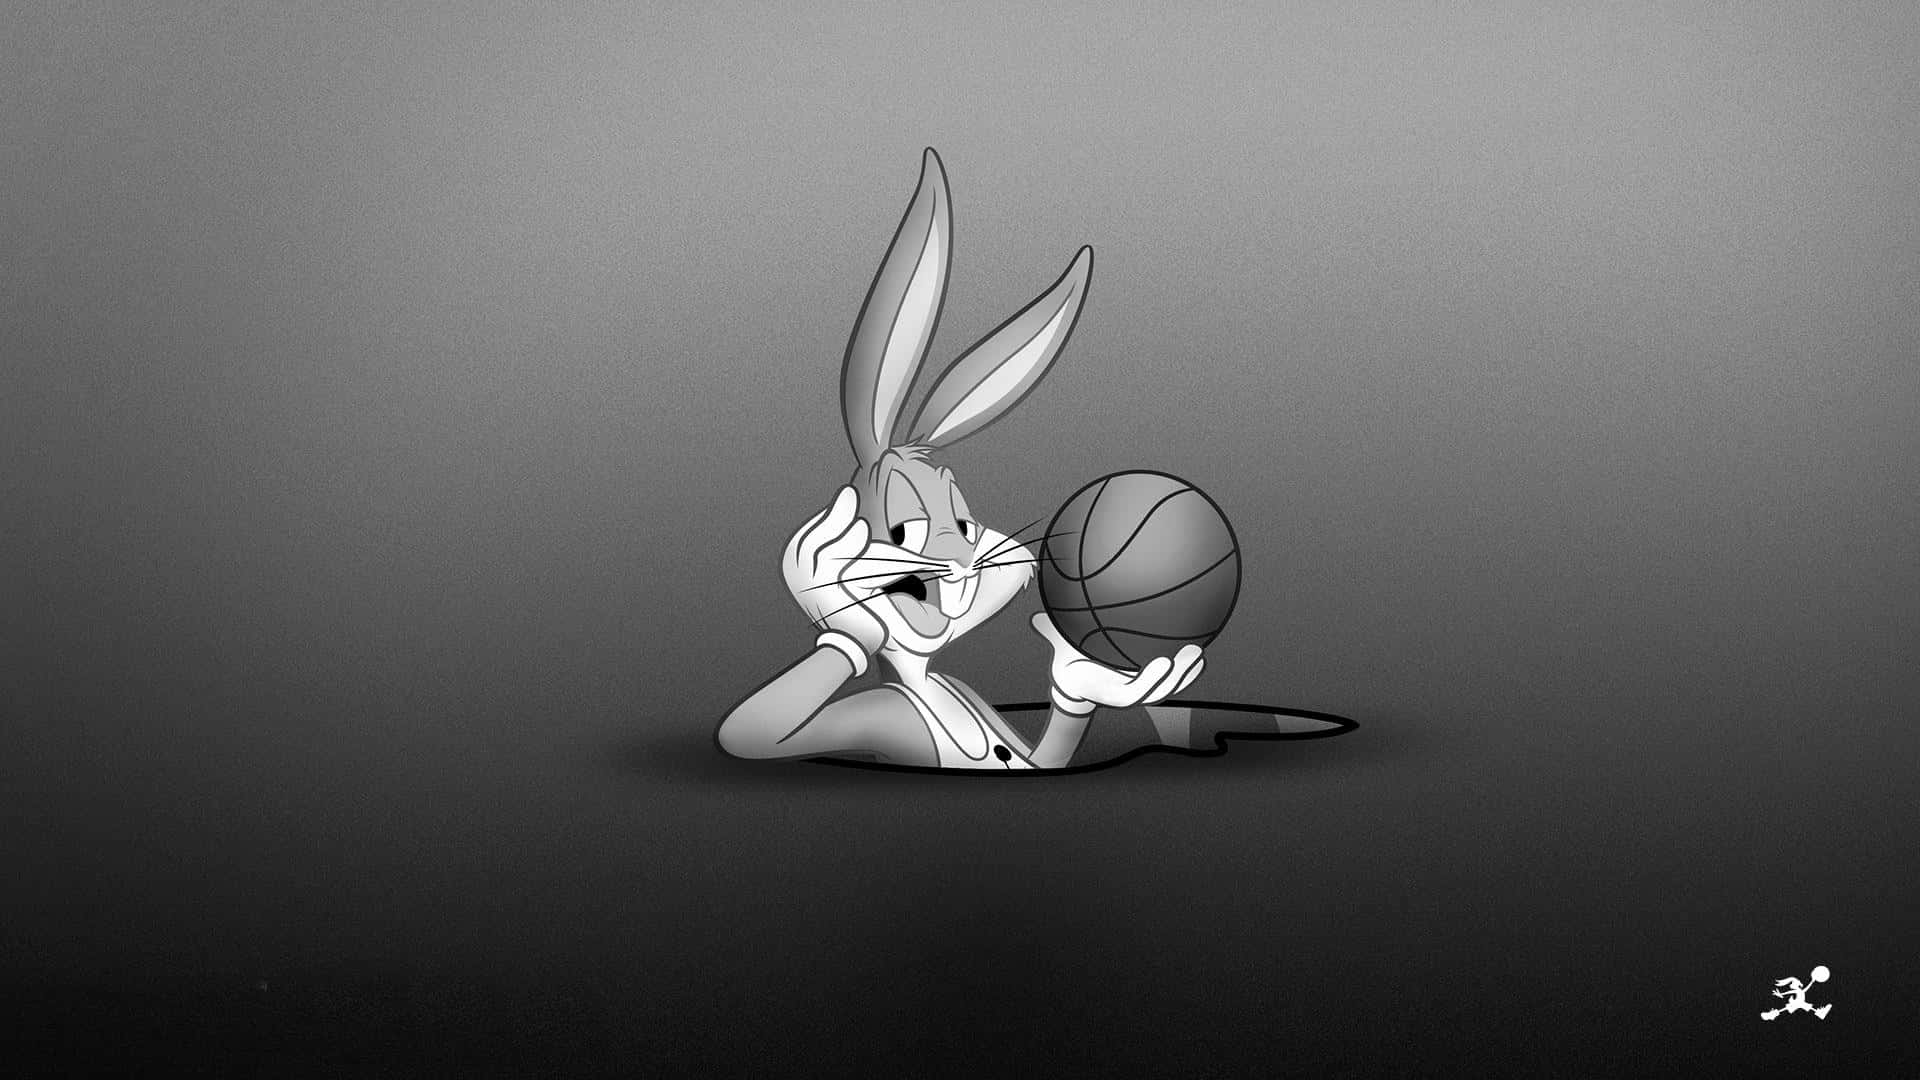 Derlegendäre Bugs Bunny Präsentiert Seinen Markanten Stil.